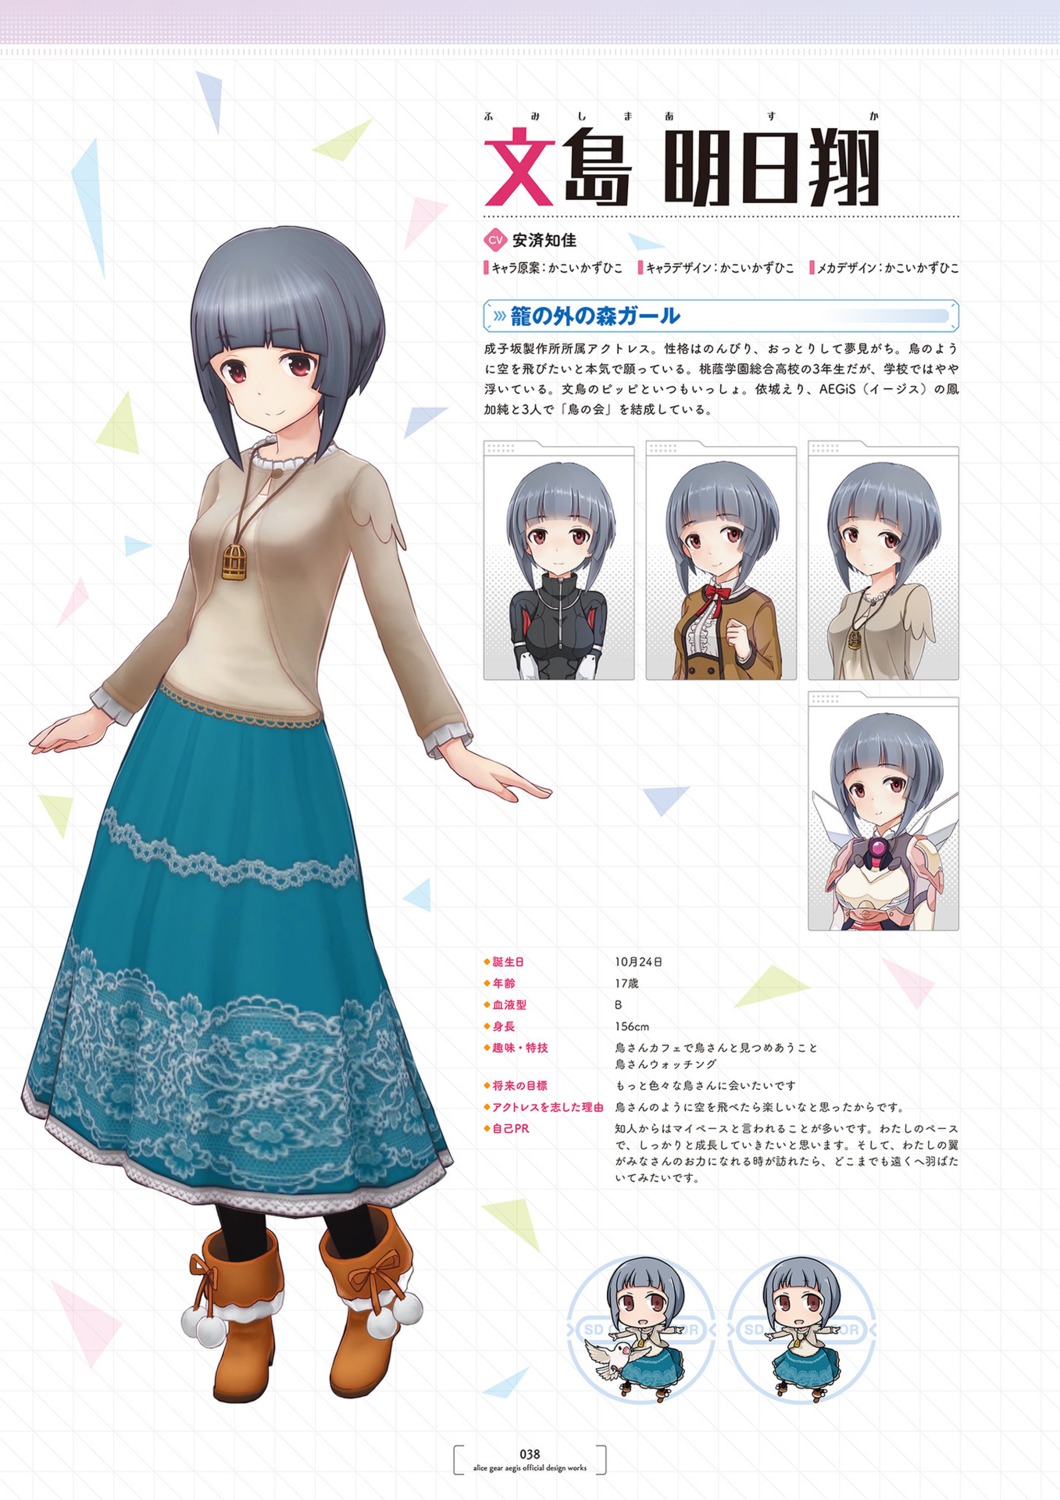 alice_gear_aegis character_design chibi fumishima_asuka kakoi_kazuhiko pipi profile_page seifuku